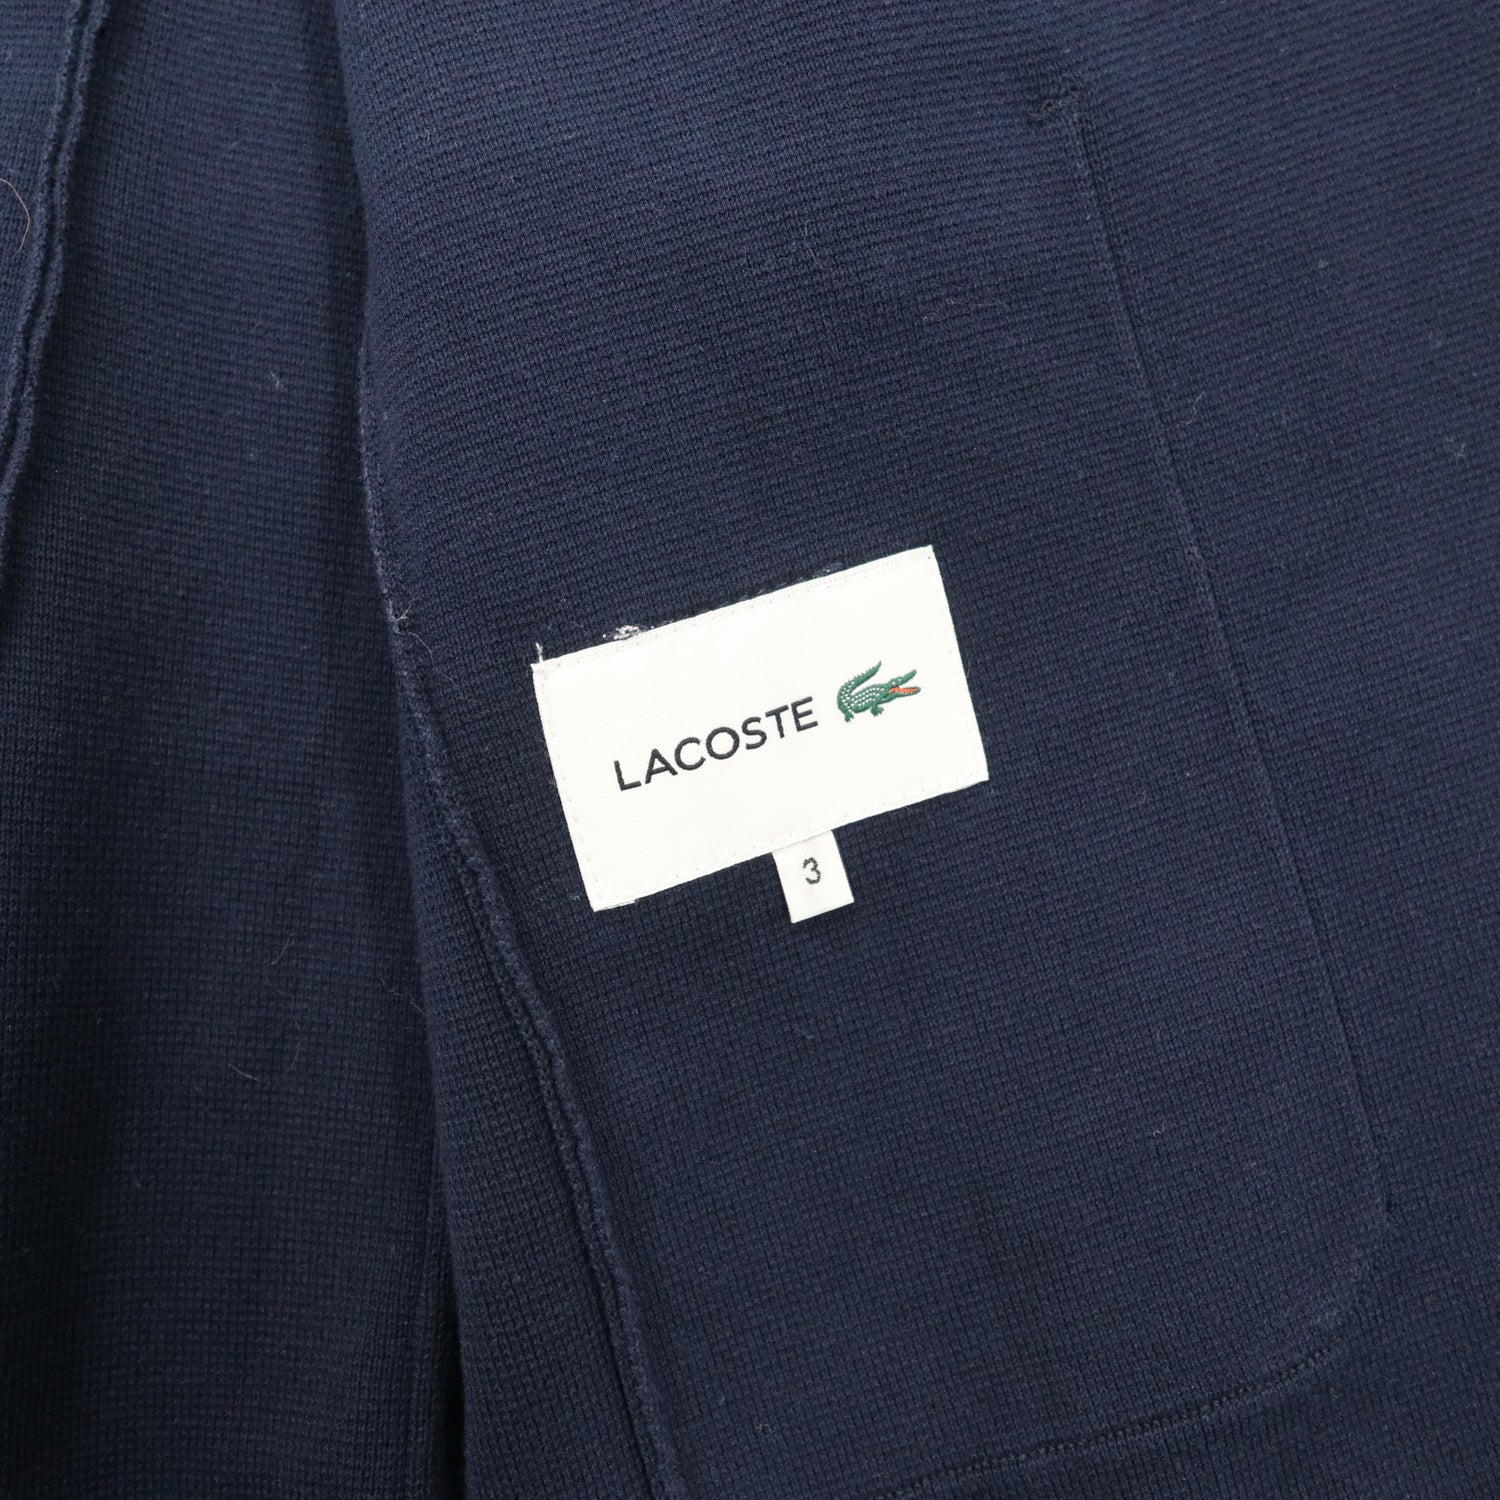 LACOSTE Knit finish tailored jacket 3 Navy cotton Milan Rib One